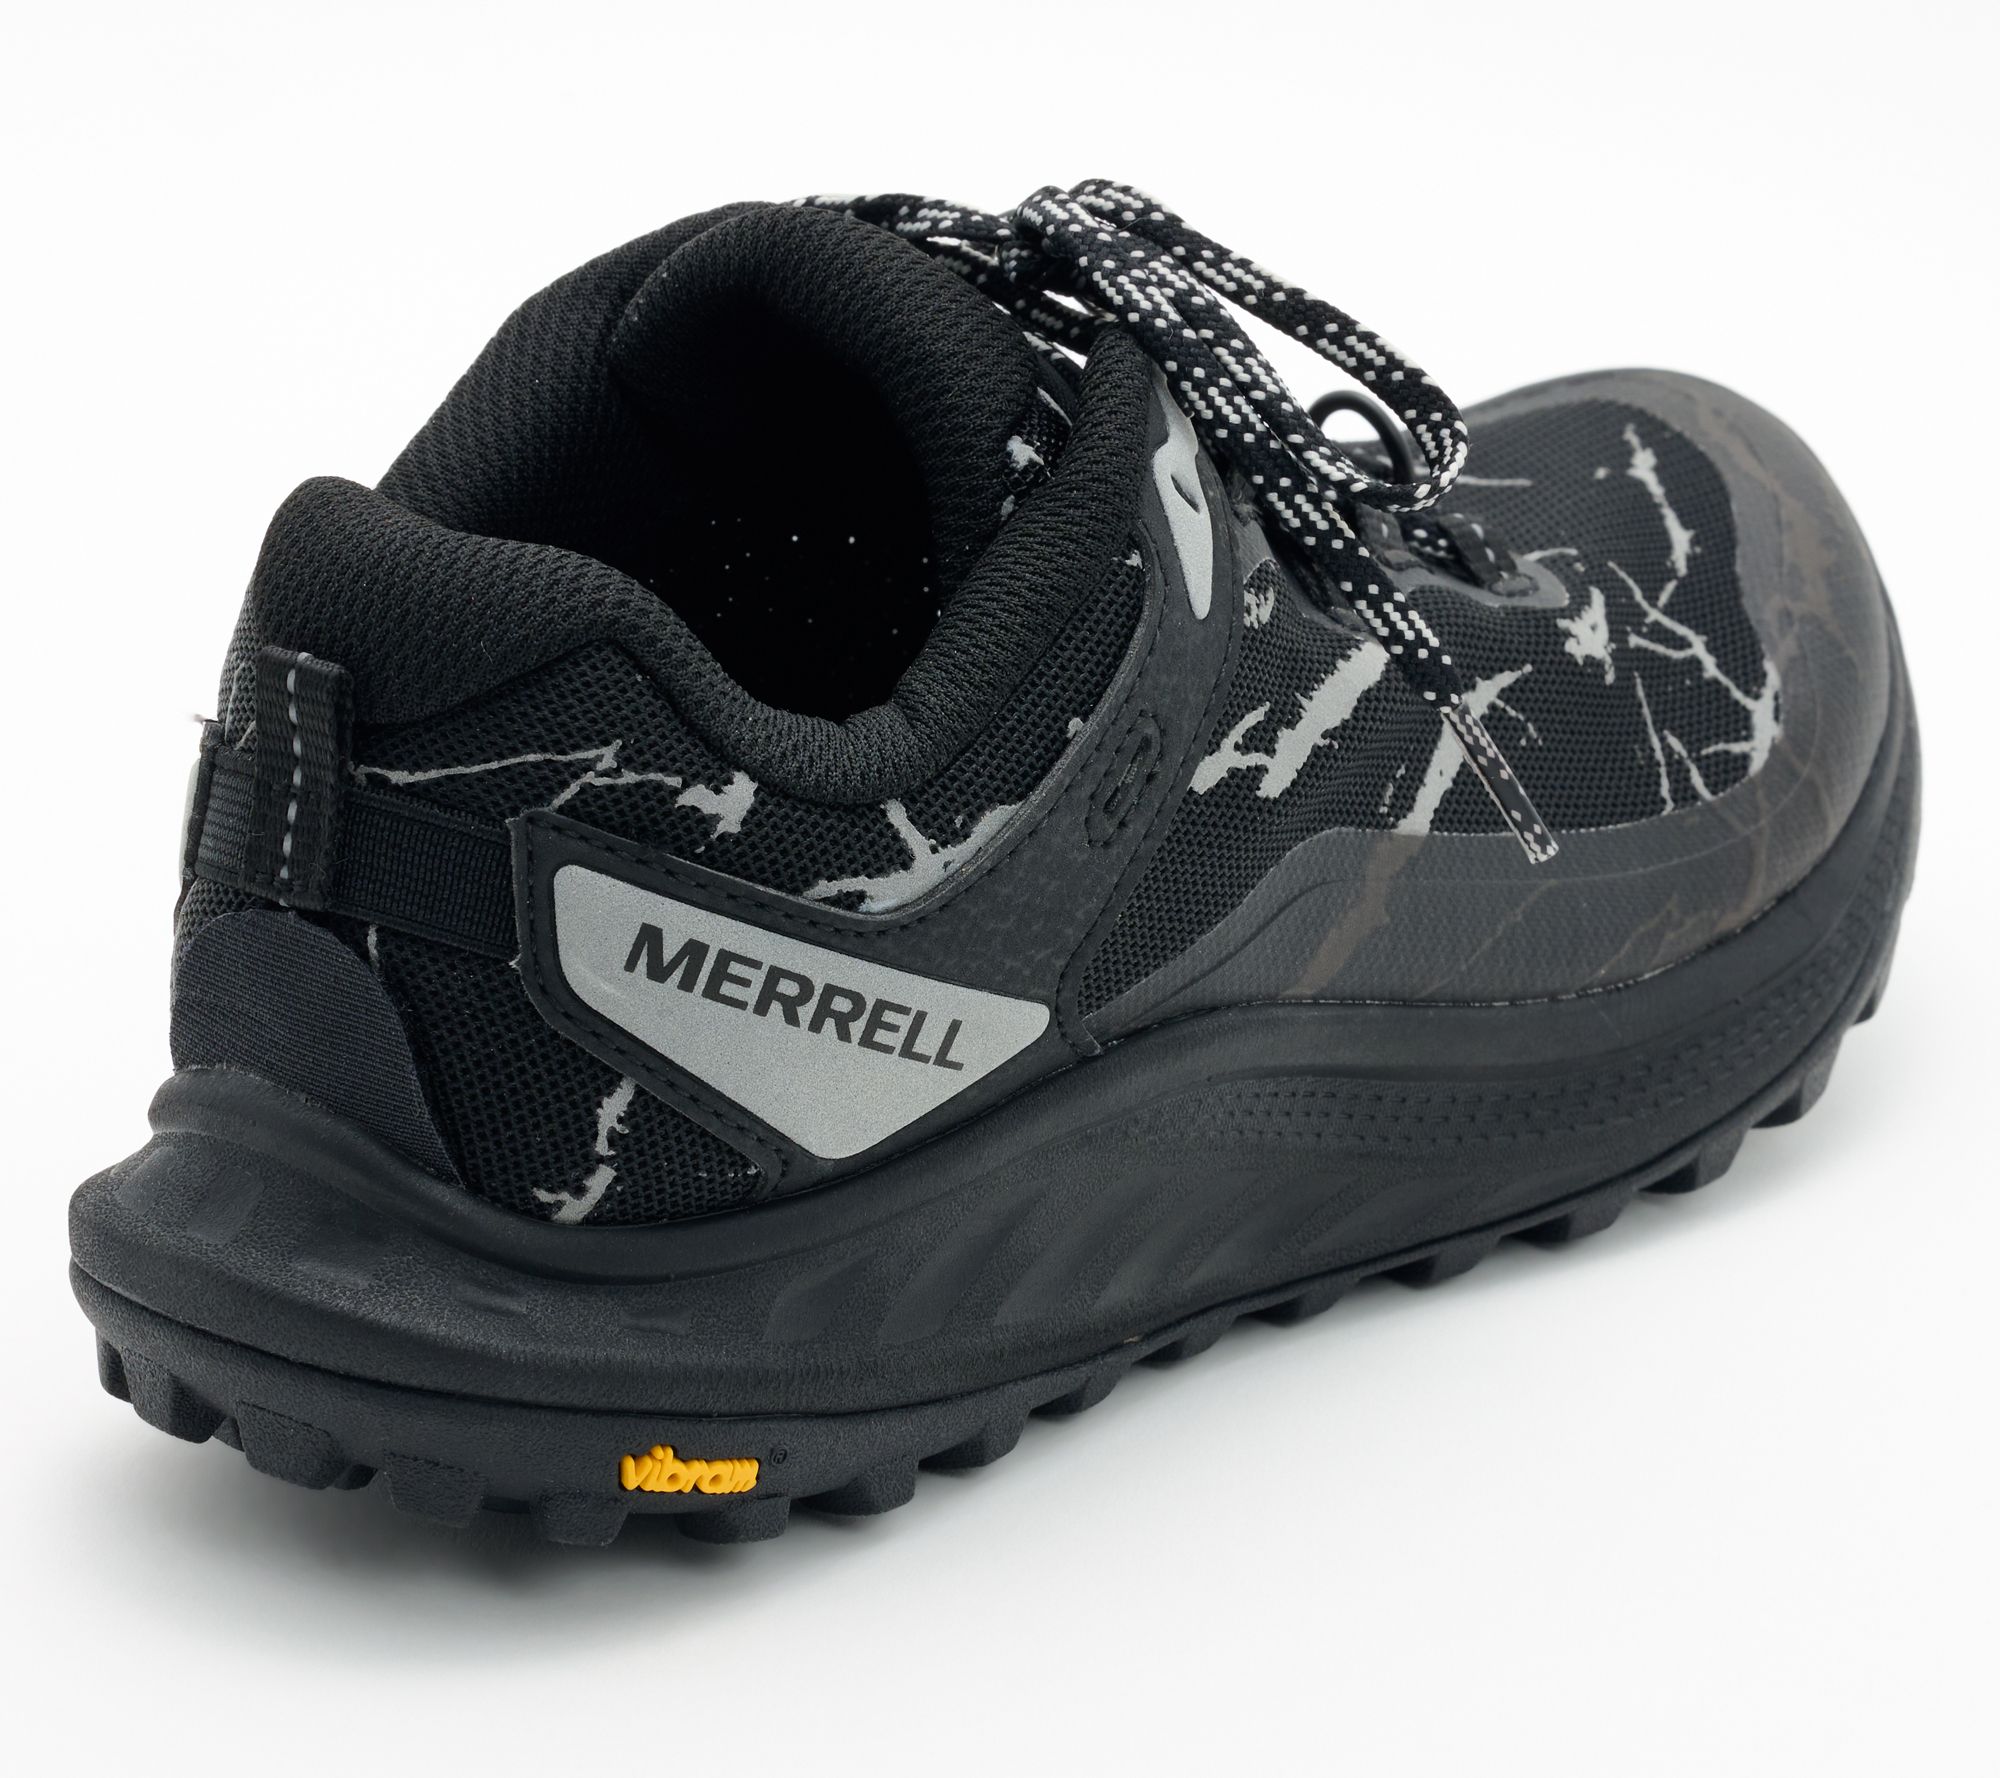 Merrell - Colección Barefoot Trail Running 2021 